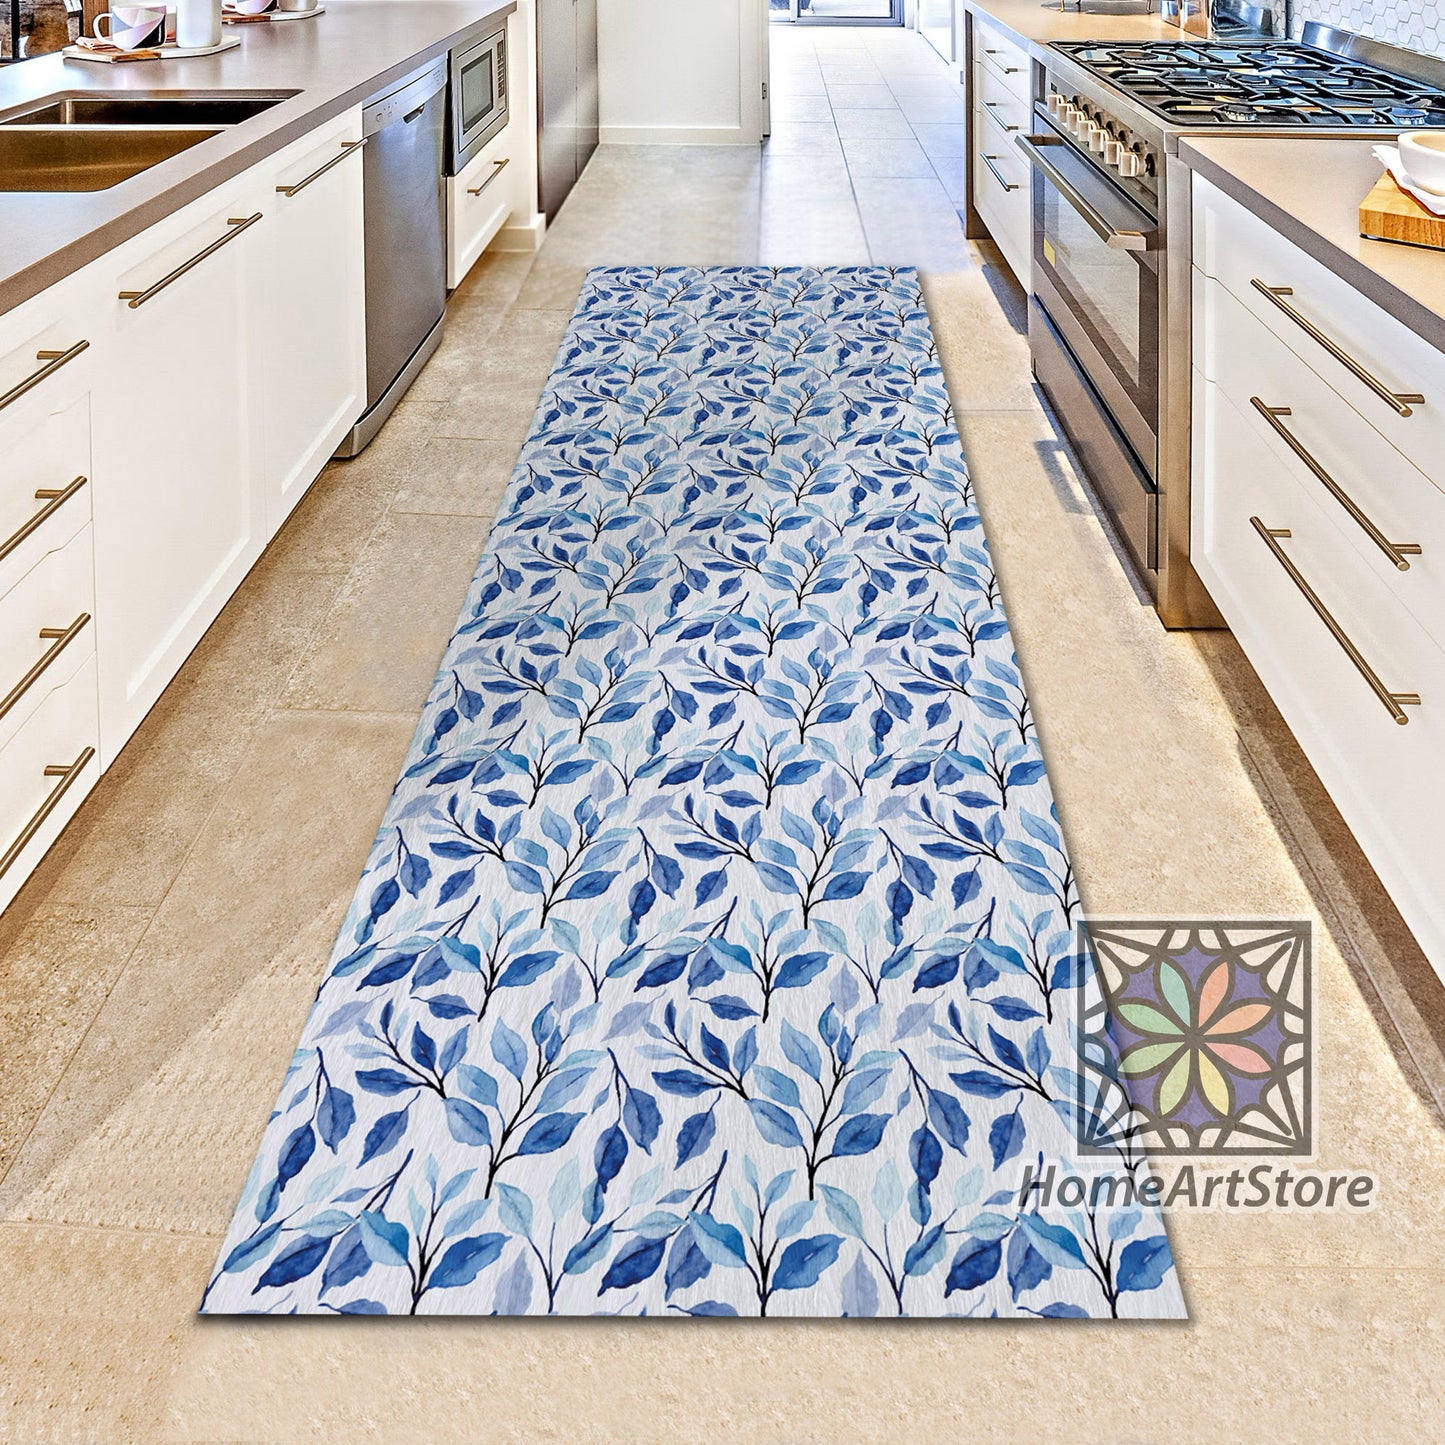 Blue Leaves Pattern Rug, Watercolor Floral Runner Rug, Kitchen Boho Style Carpet, Hallway Runner, Mat